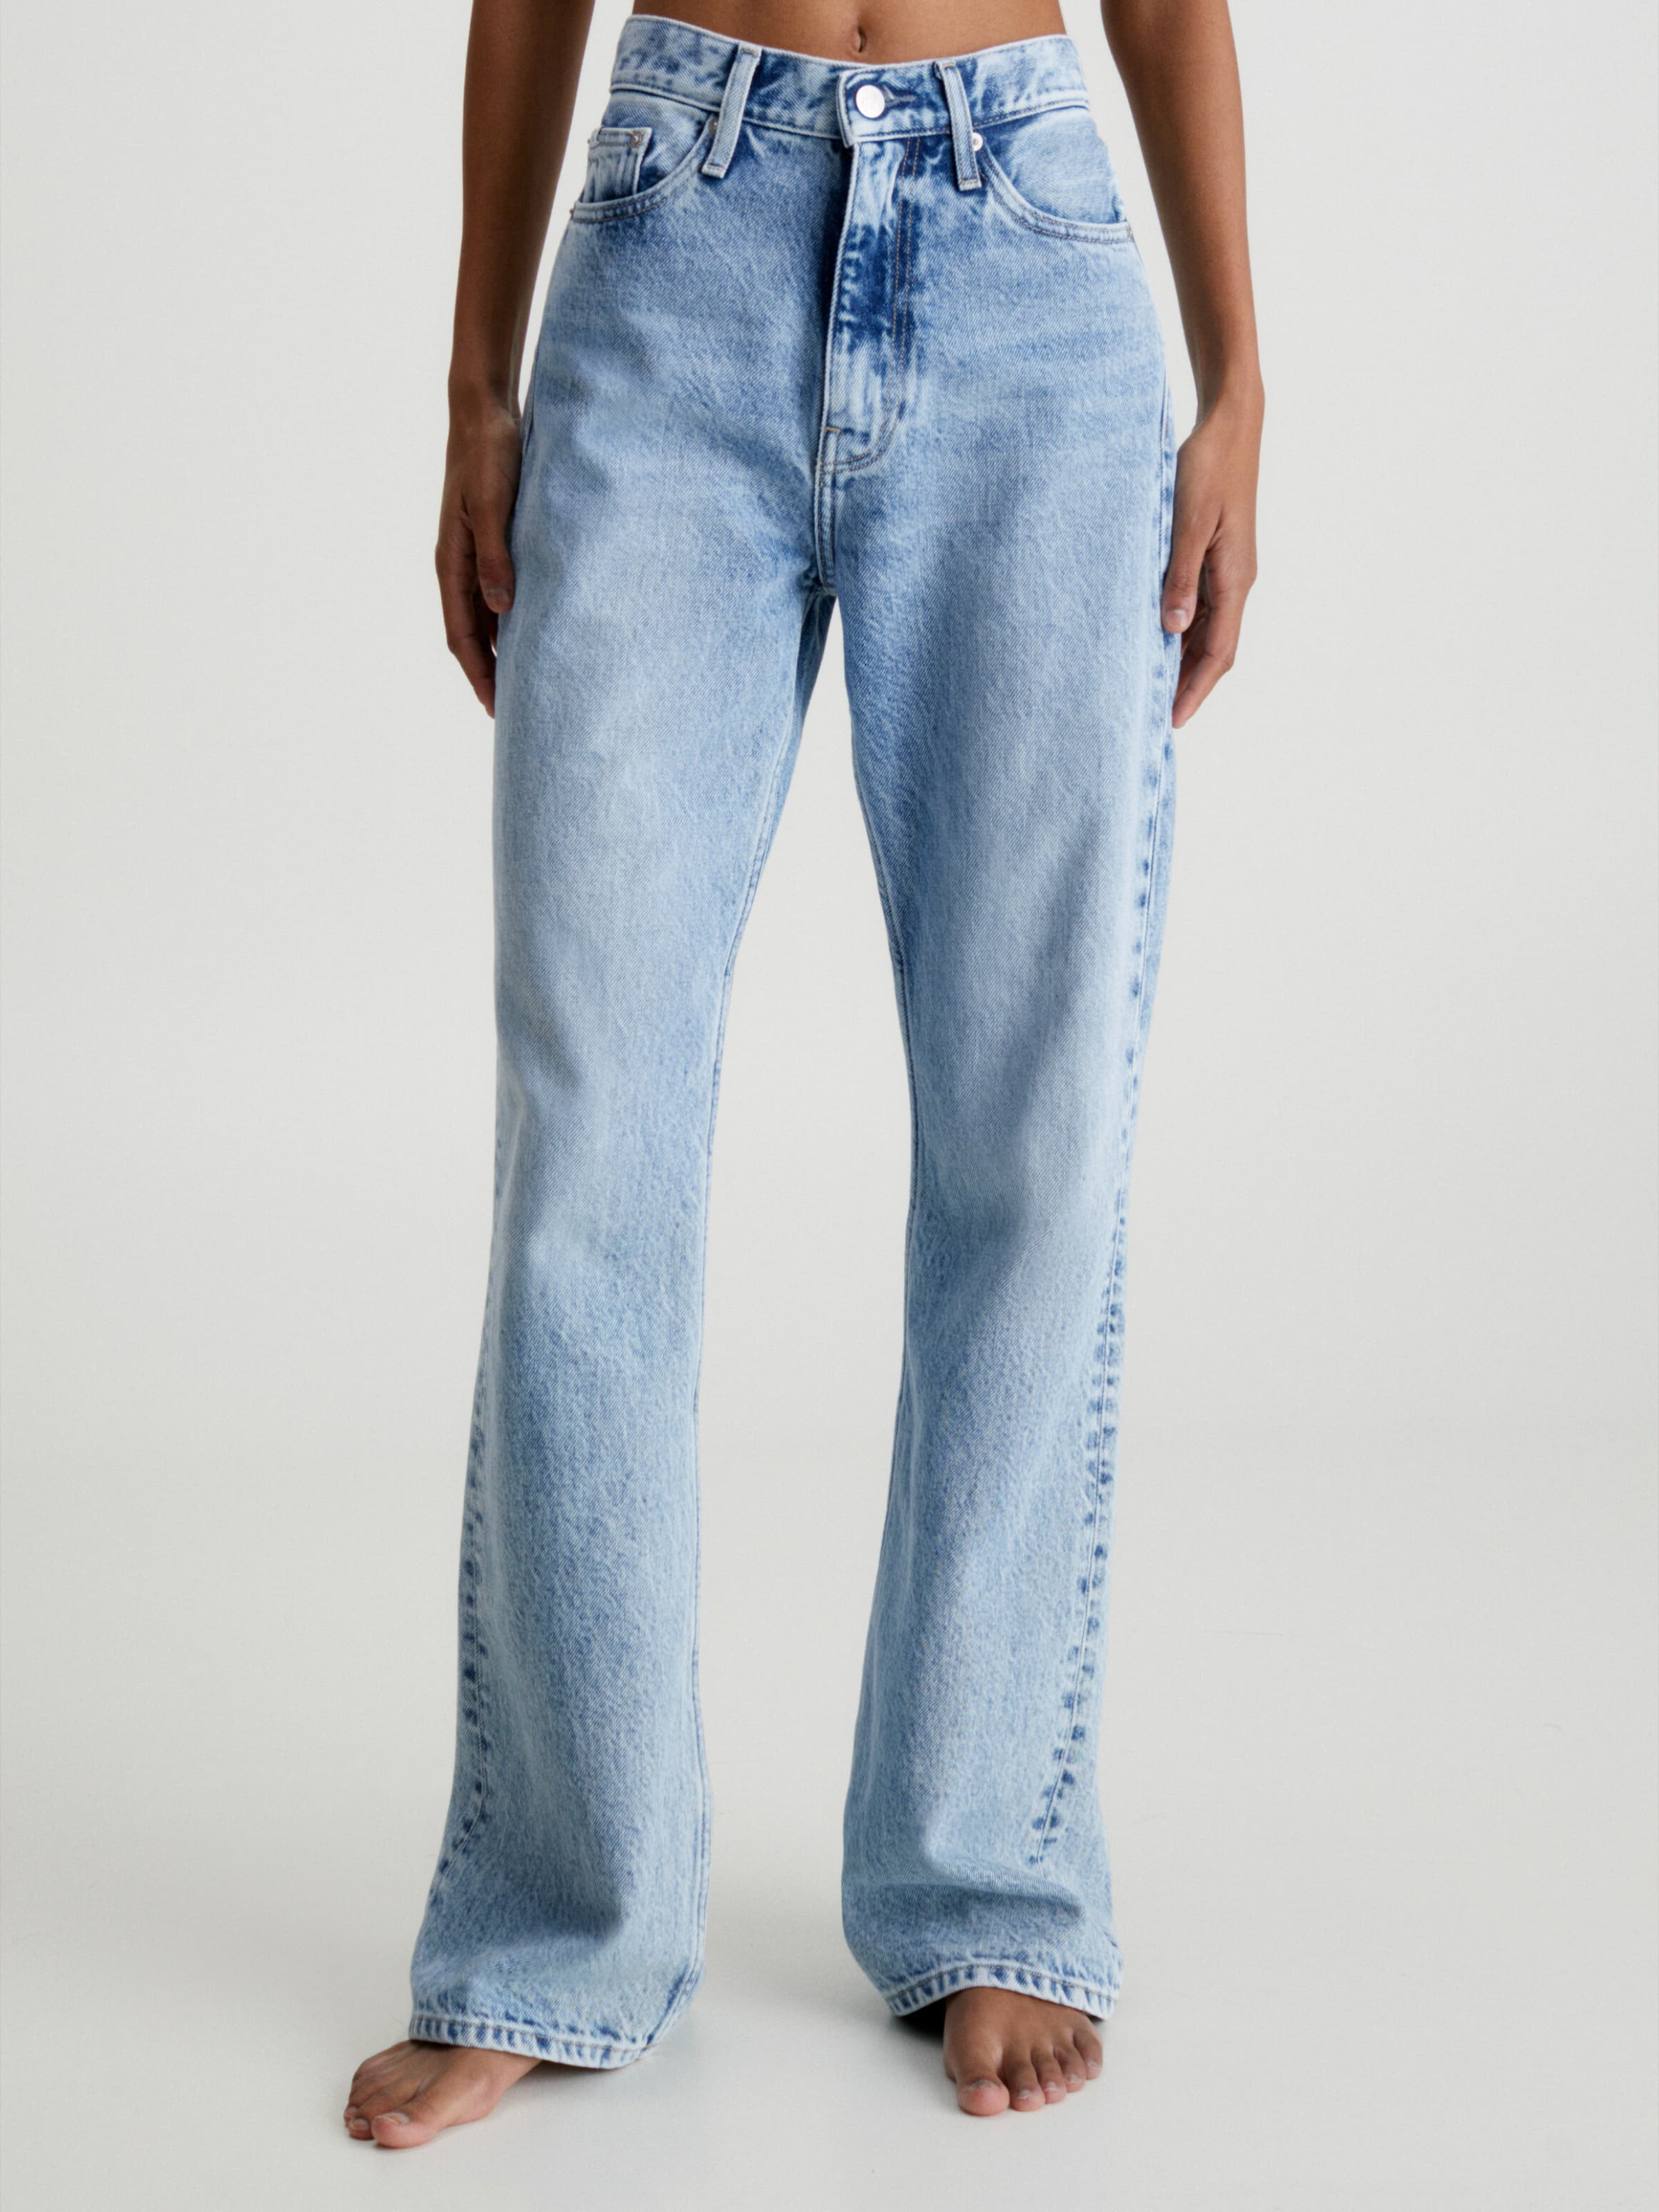 Authentic Bootcut Jean In Bleach Blue Denim - Just Jeans Online